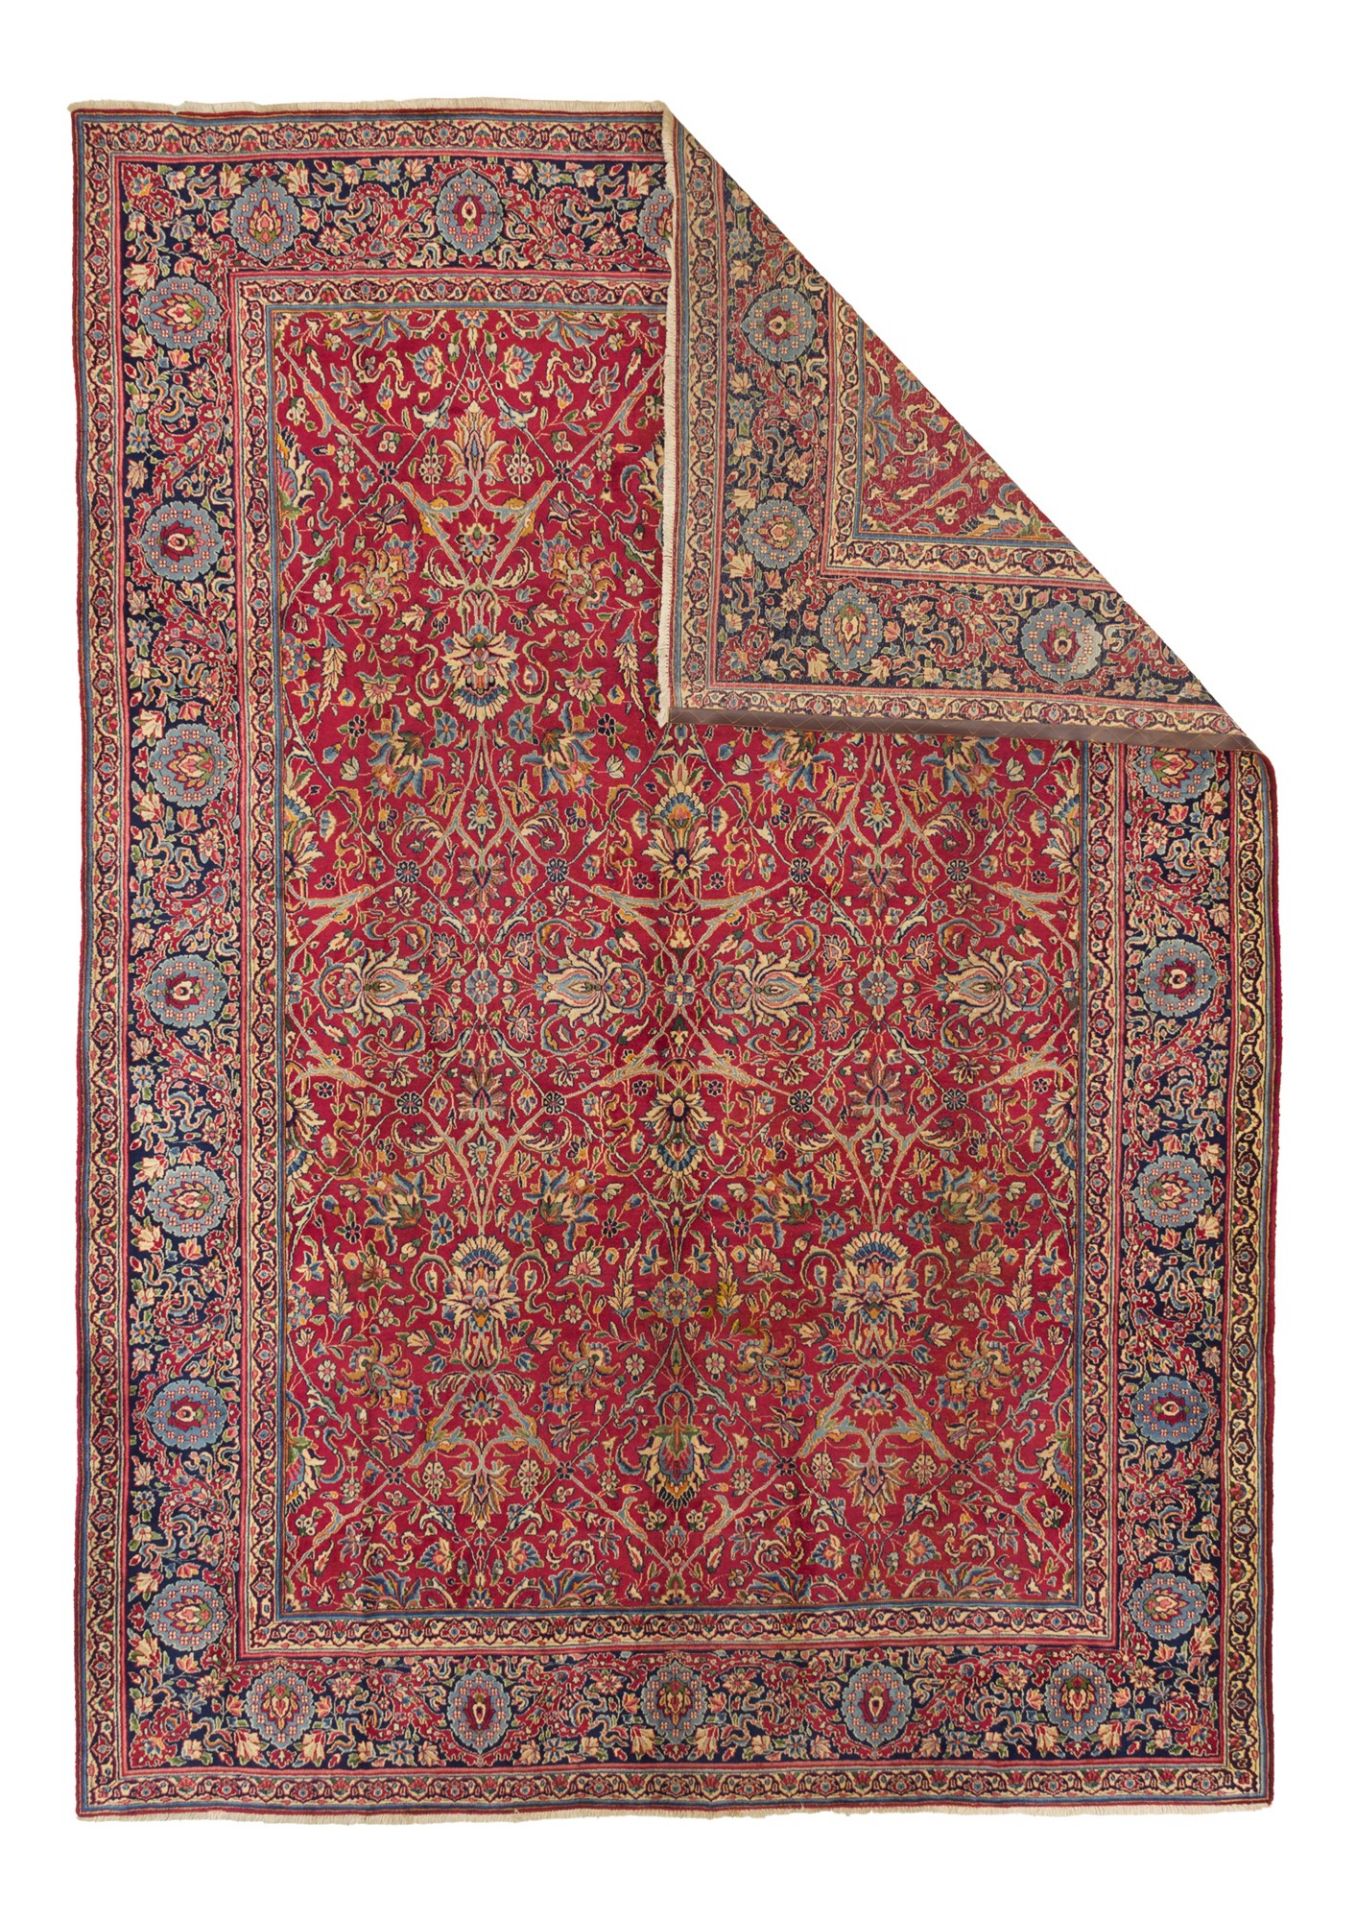 Kirman carpet - Image 2 of 5